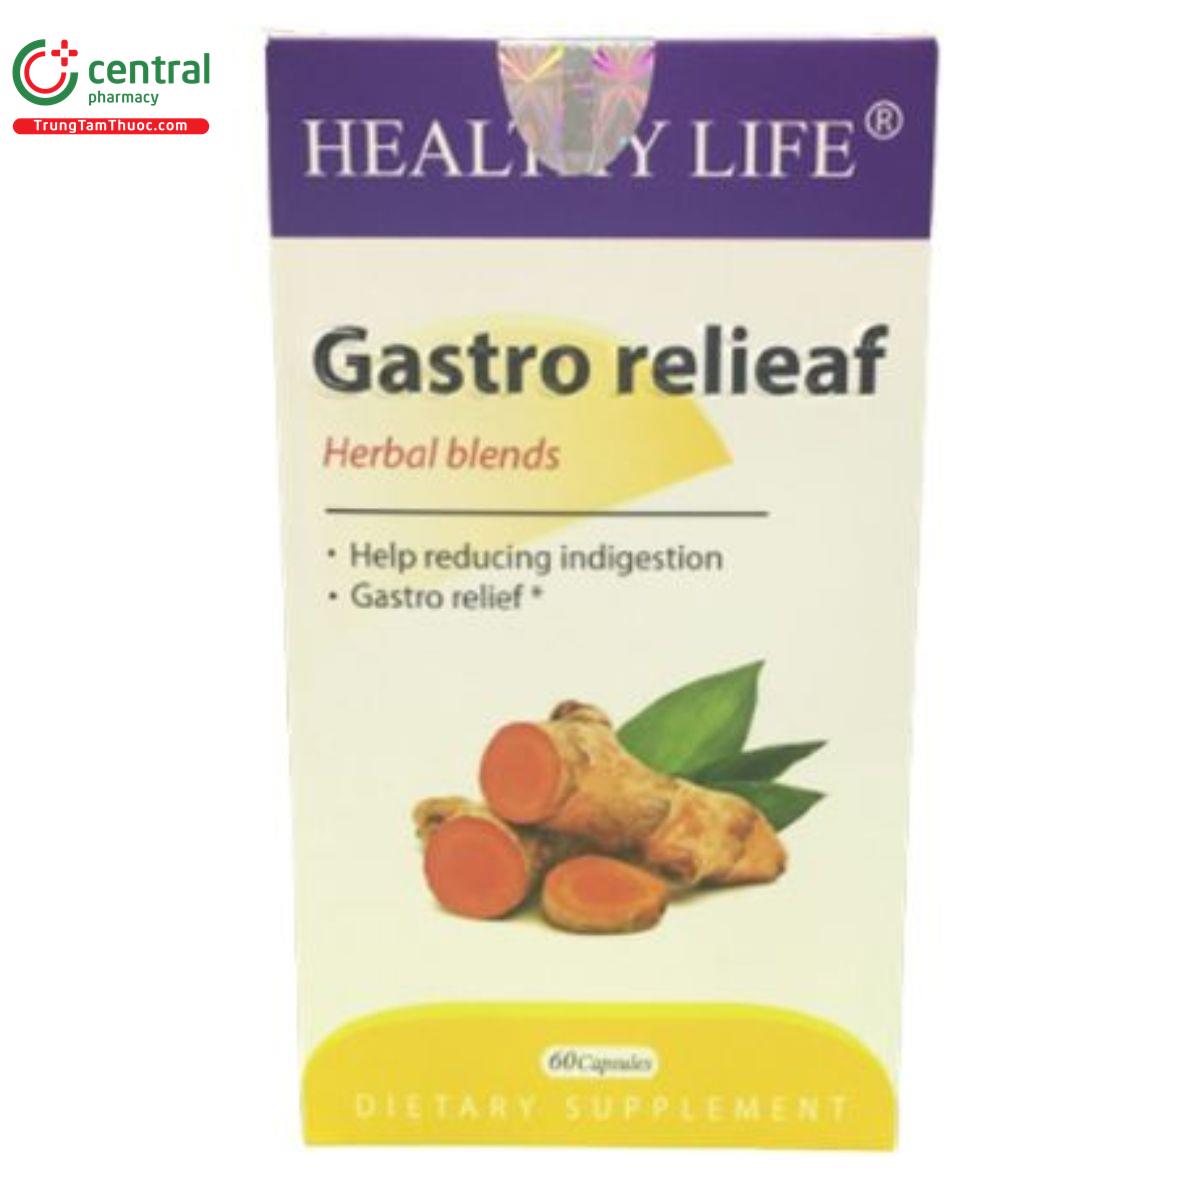 healthy life gastro relieaf 3 D1704